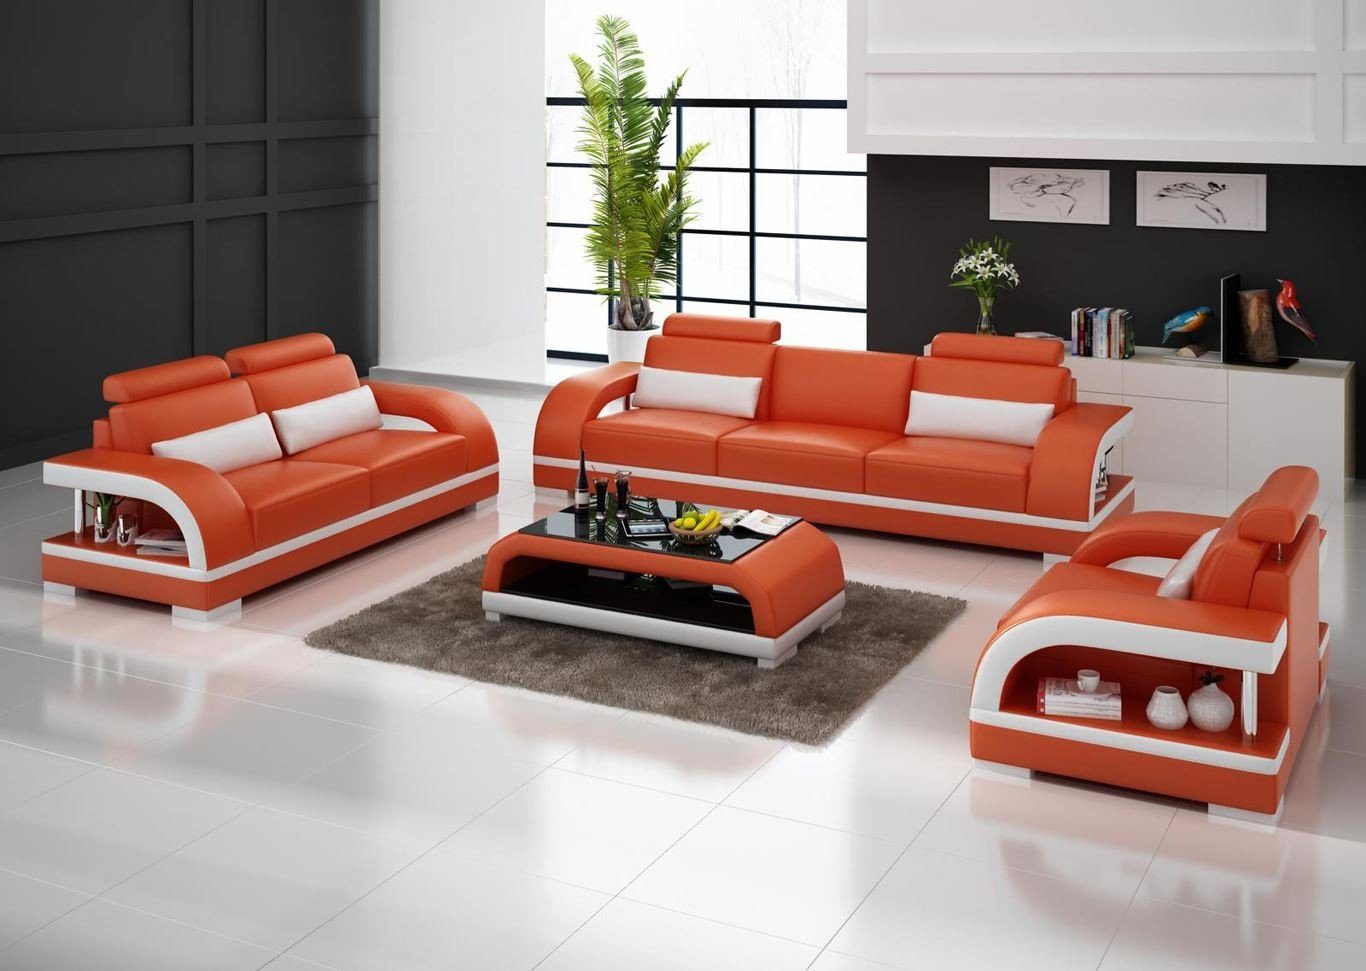 in Sofagarnitur Sofa Neu, JVmoebel Set Leder Made Europe Polstermöbel Luxuriöse Orange weiße 3+2